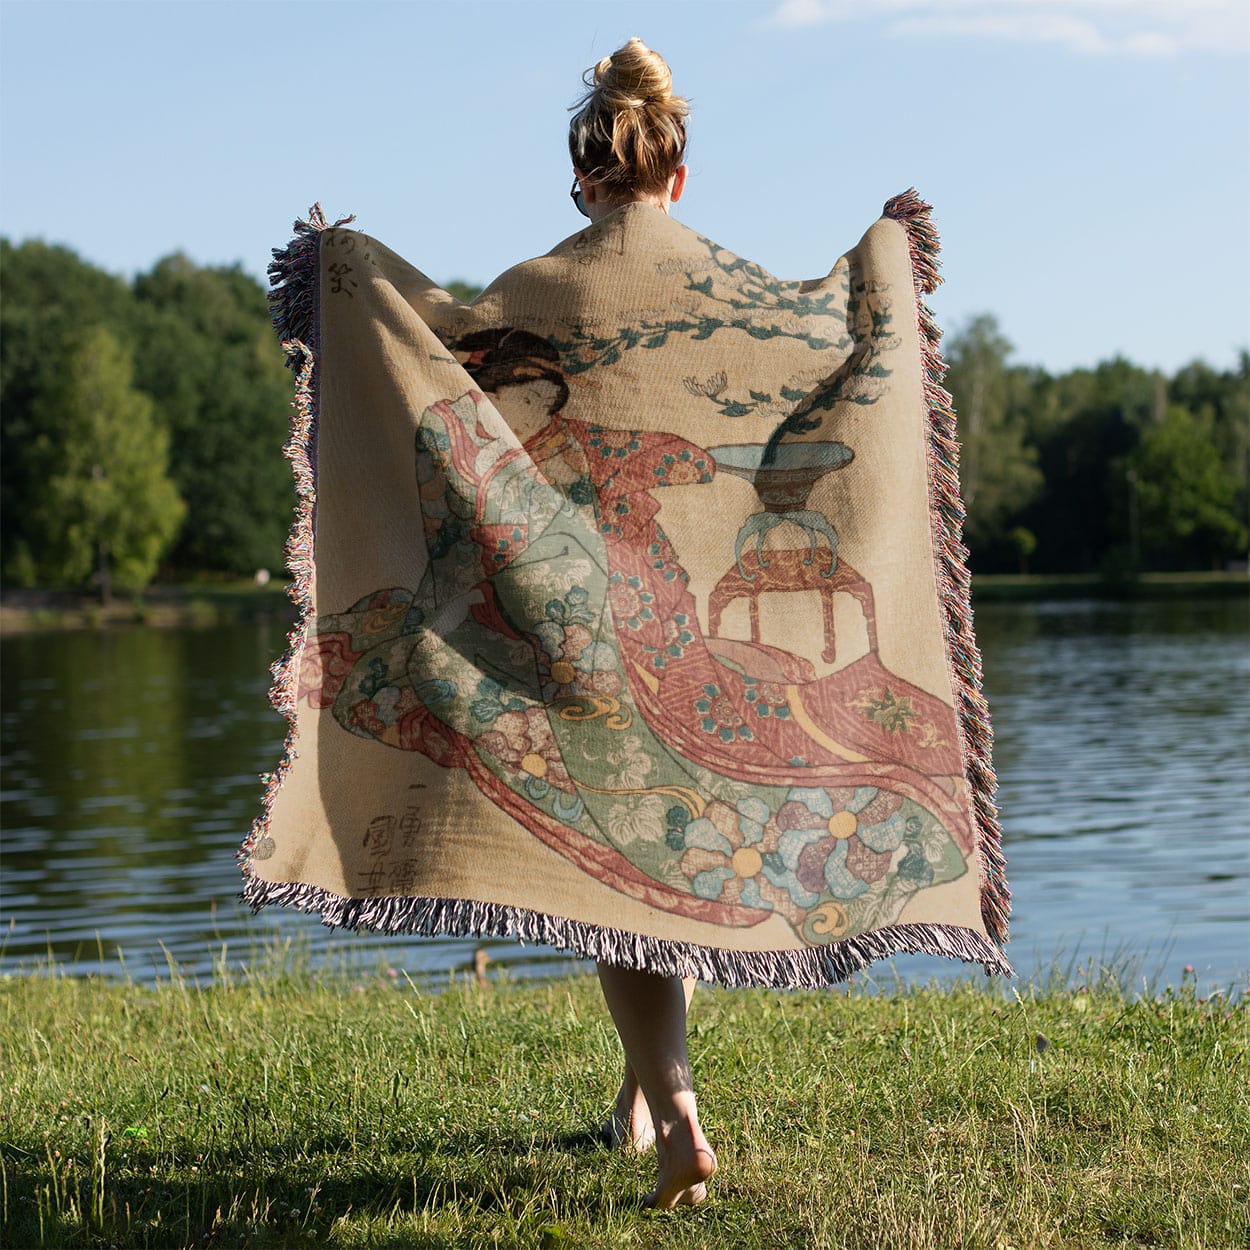 Japanese Aesthetic Woven Blanket Held on a Woman's Back Outside